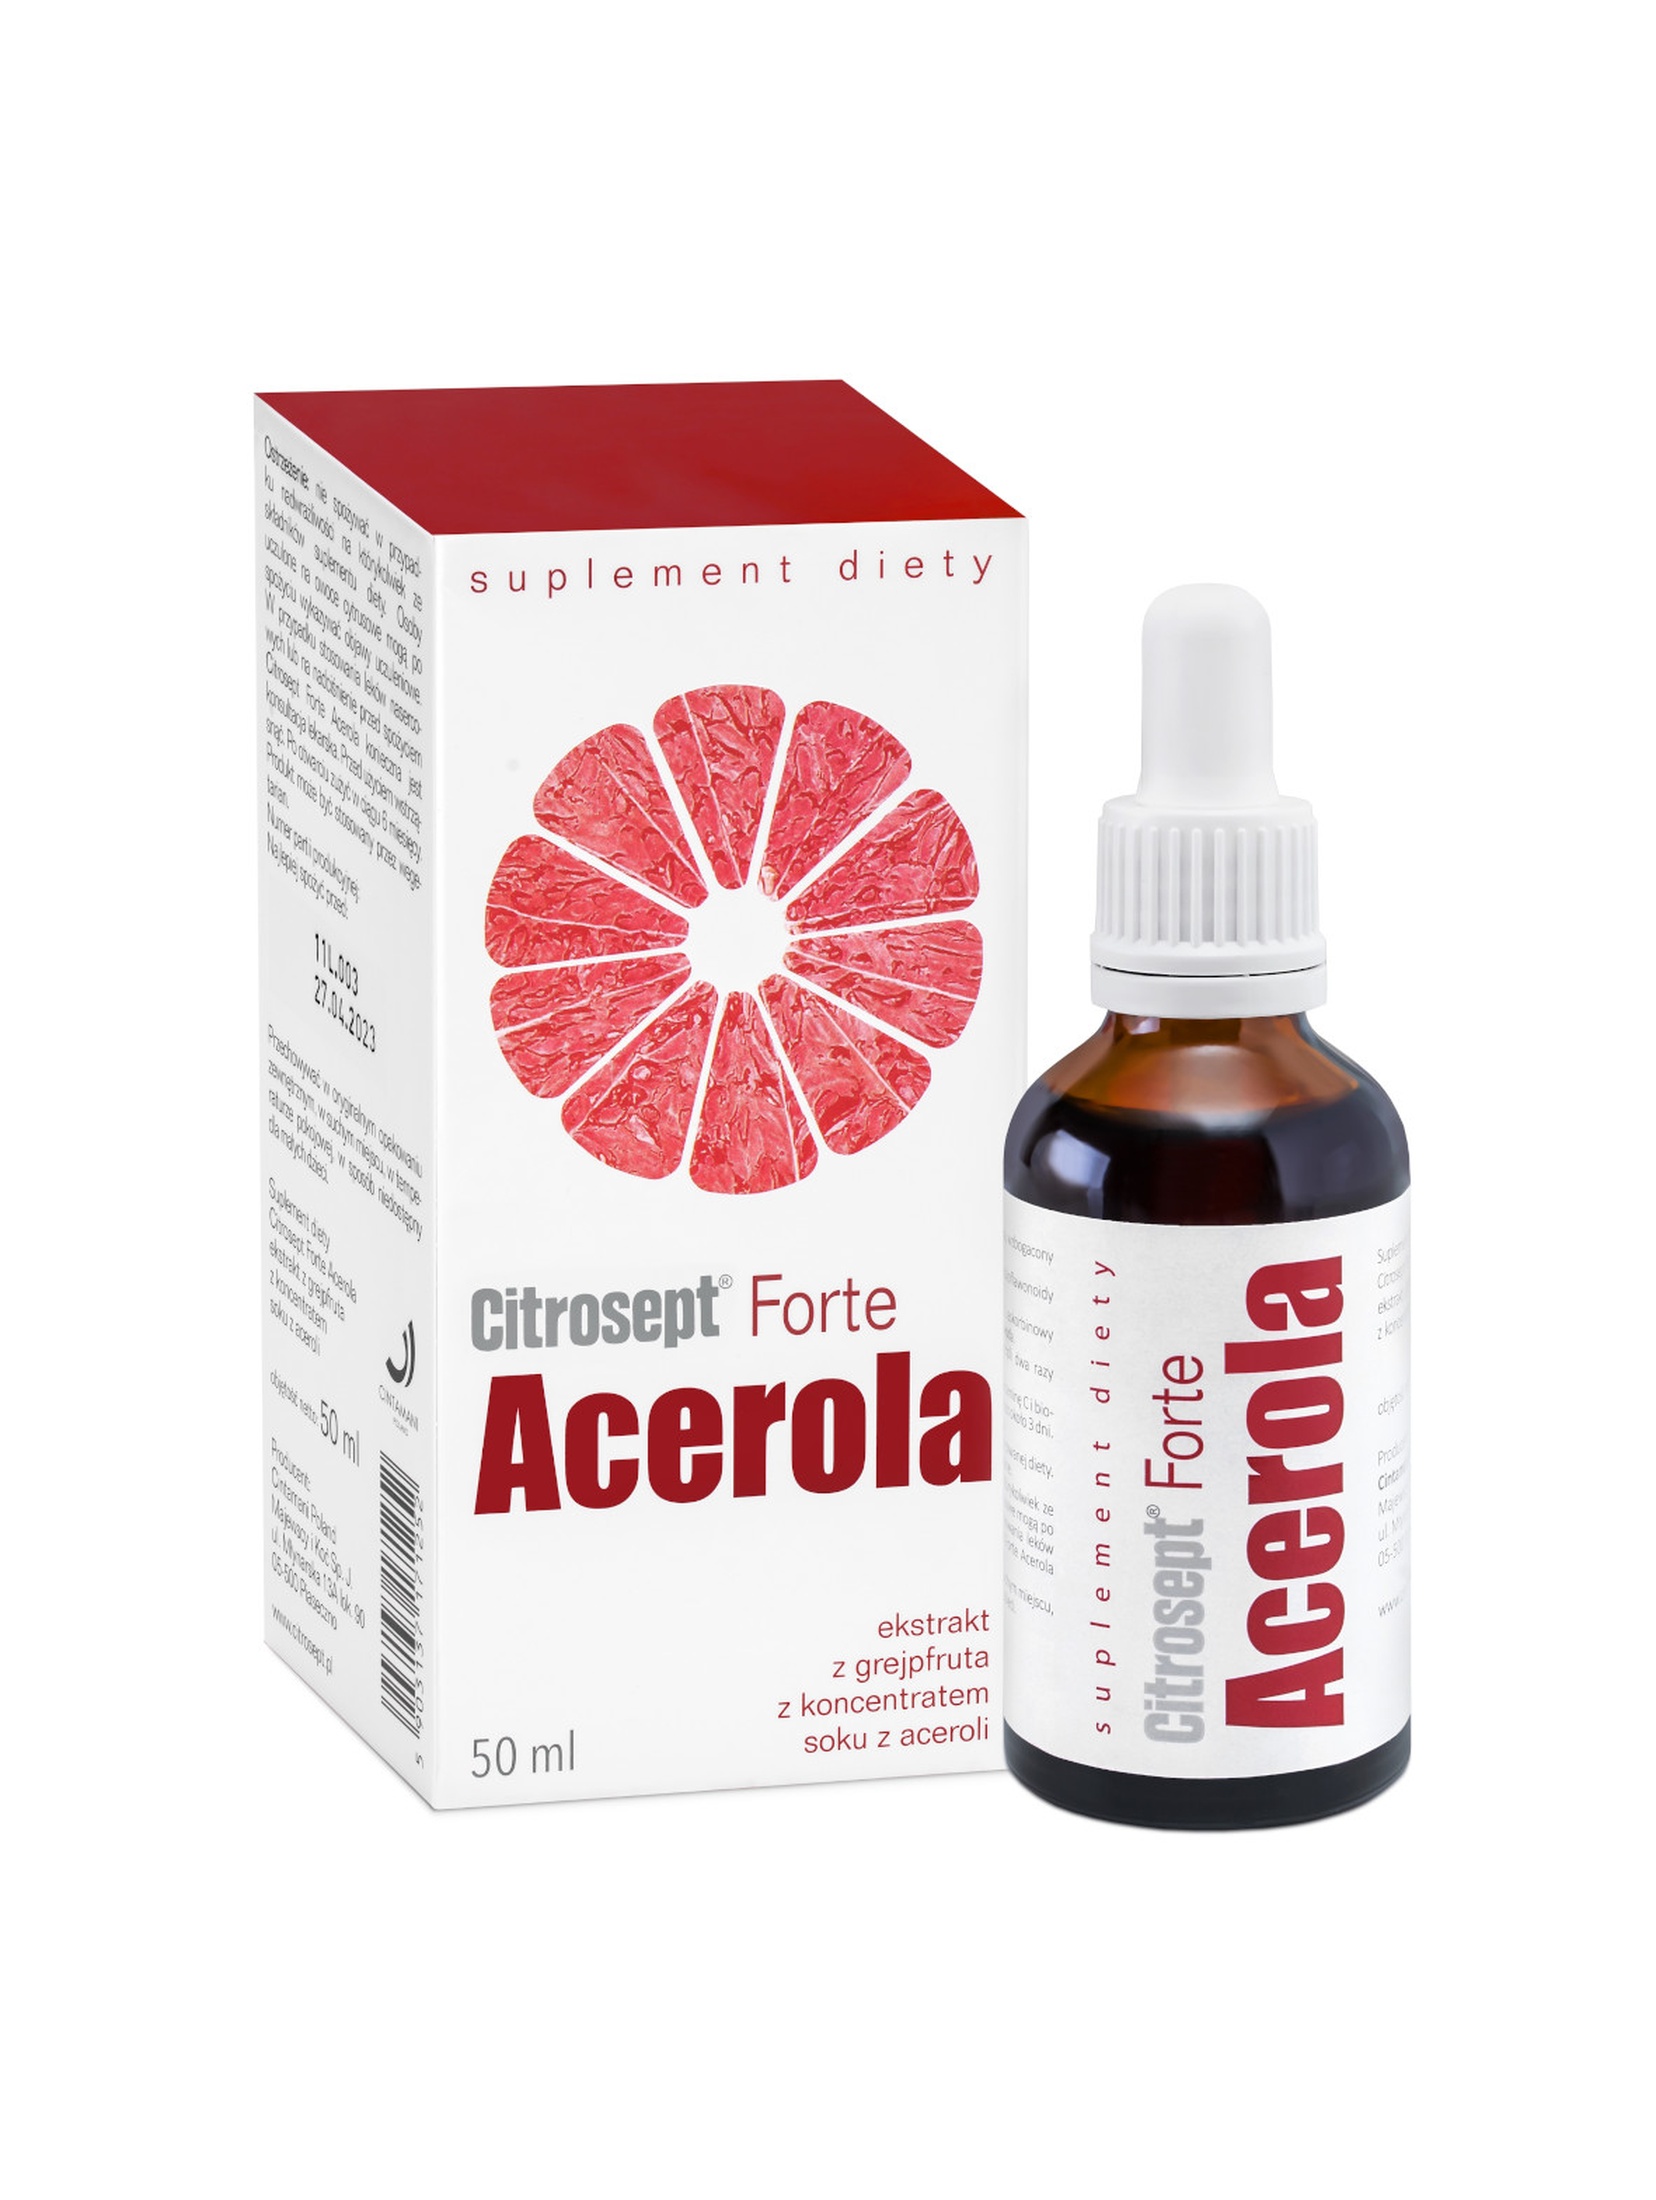 Citrosept Forte Acerola - suplement diety 50 ml